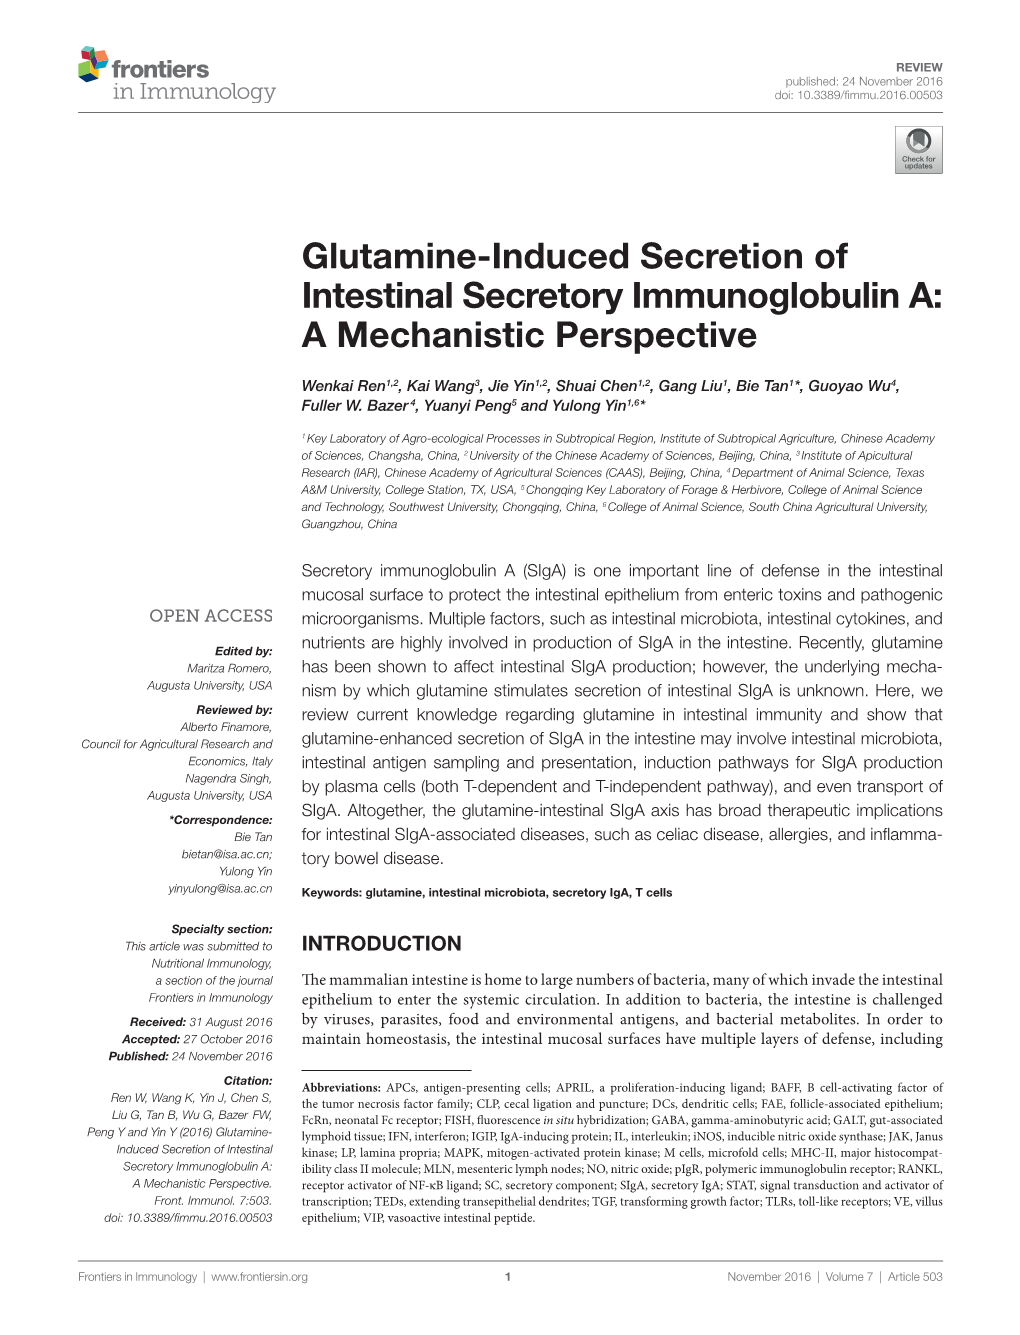 Glutamine-Induced Secretion of Intestinal Secretory Immunoglobulin A: a Mechanistic Perspective